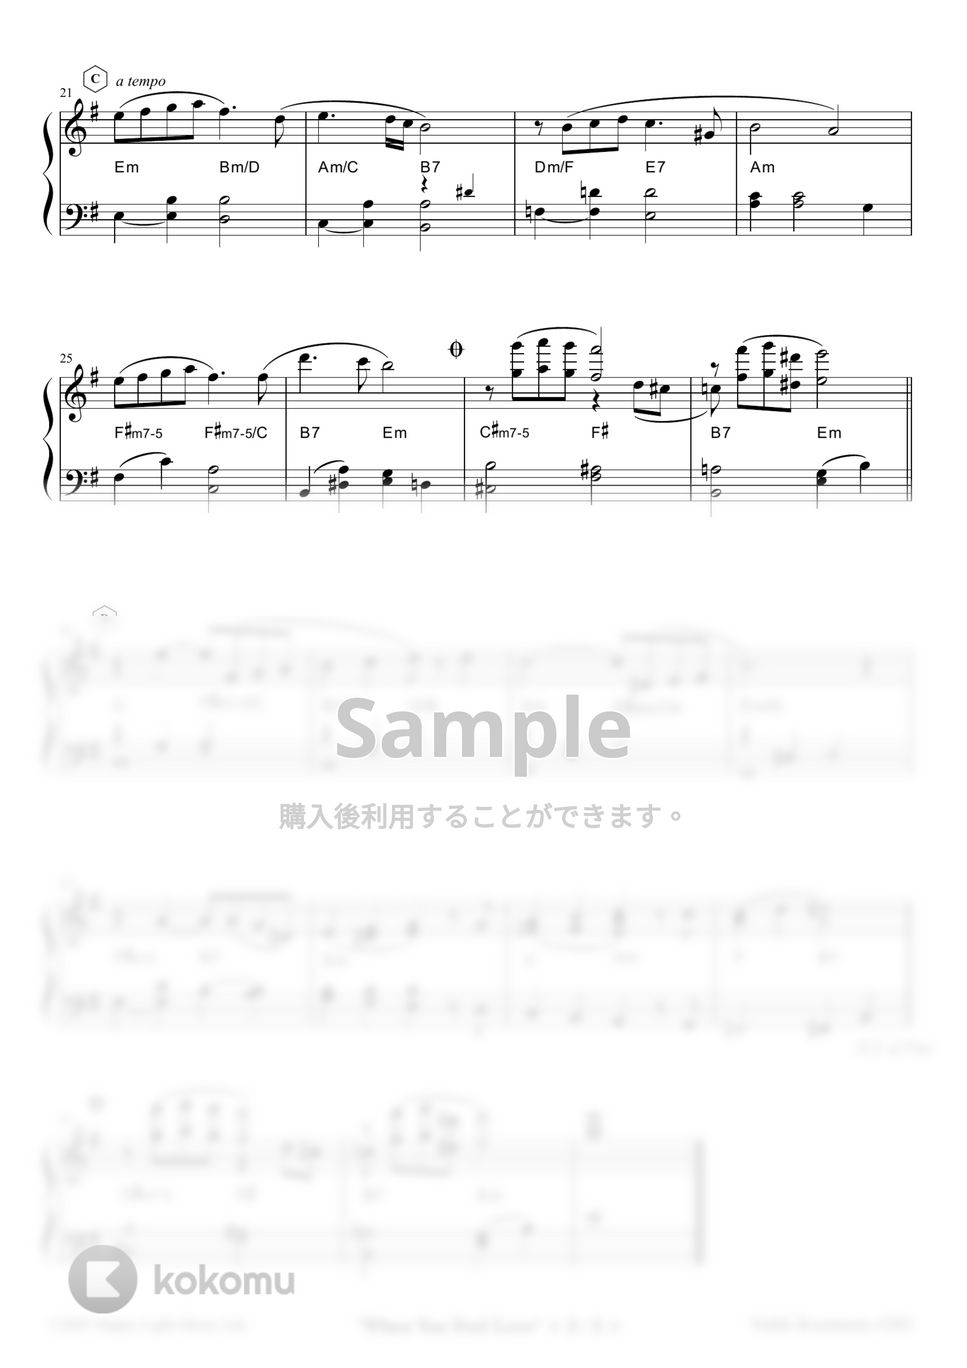 Yuhki Kuramoto - When You Feel Love (Easy Ver.) by Yuhki Kuramoto